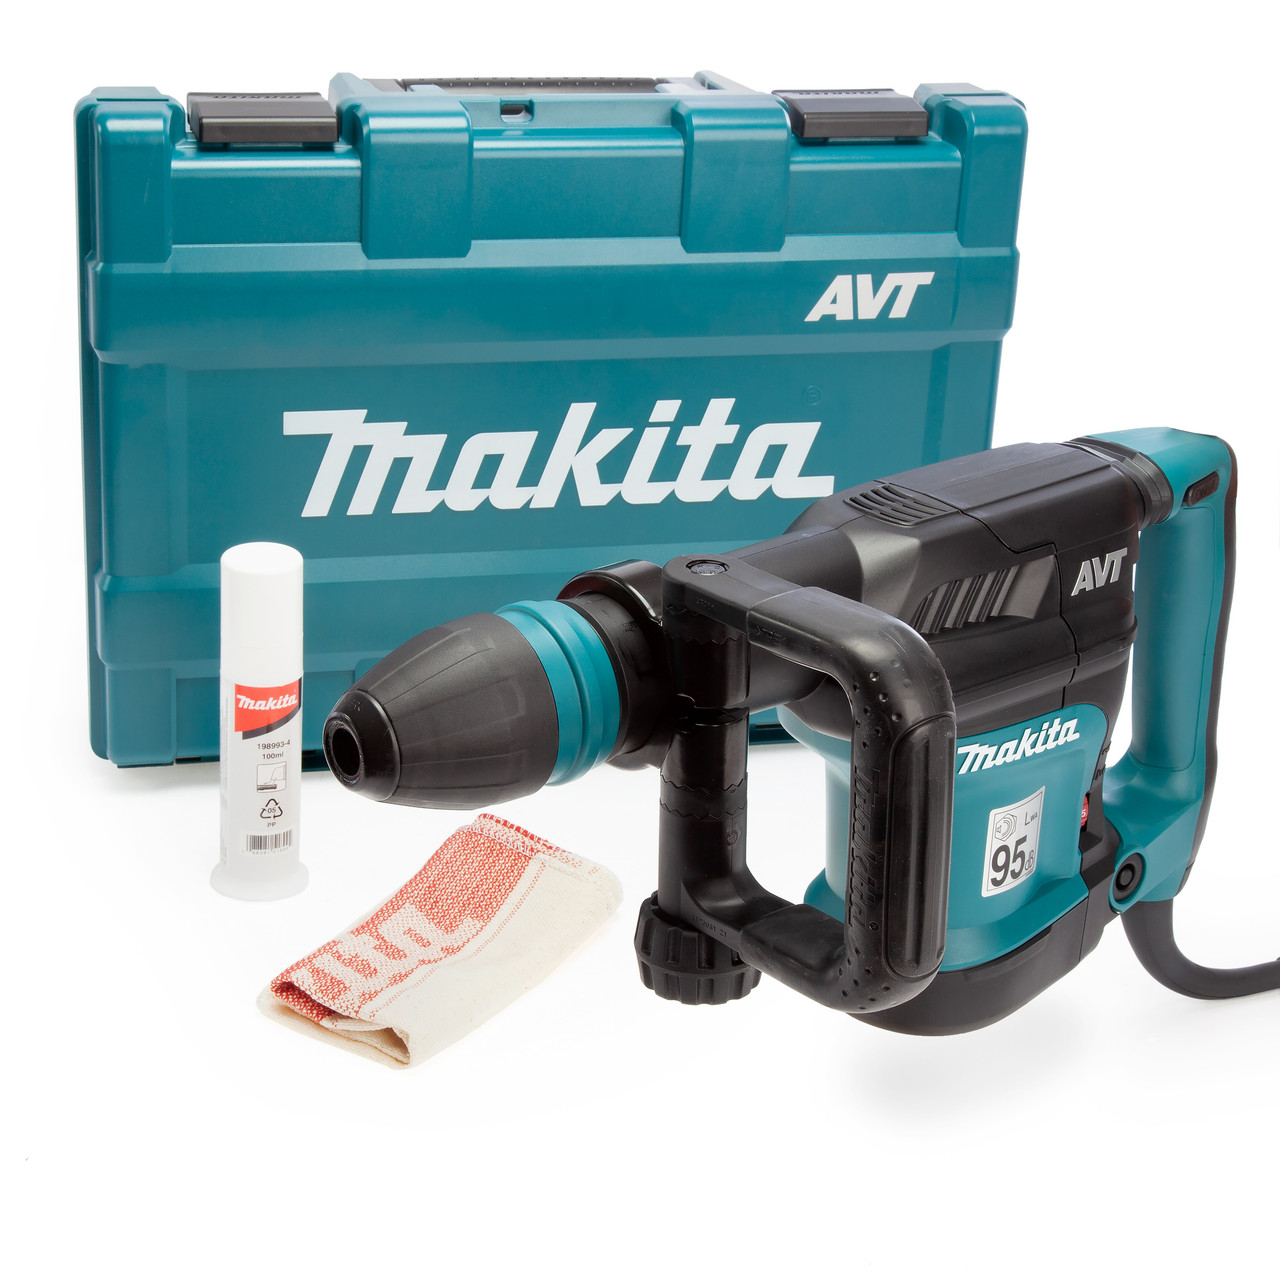 Makita HM0871C SDS Max Hammer with AVT 110V | Toolstop